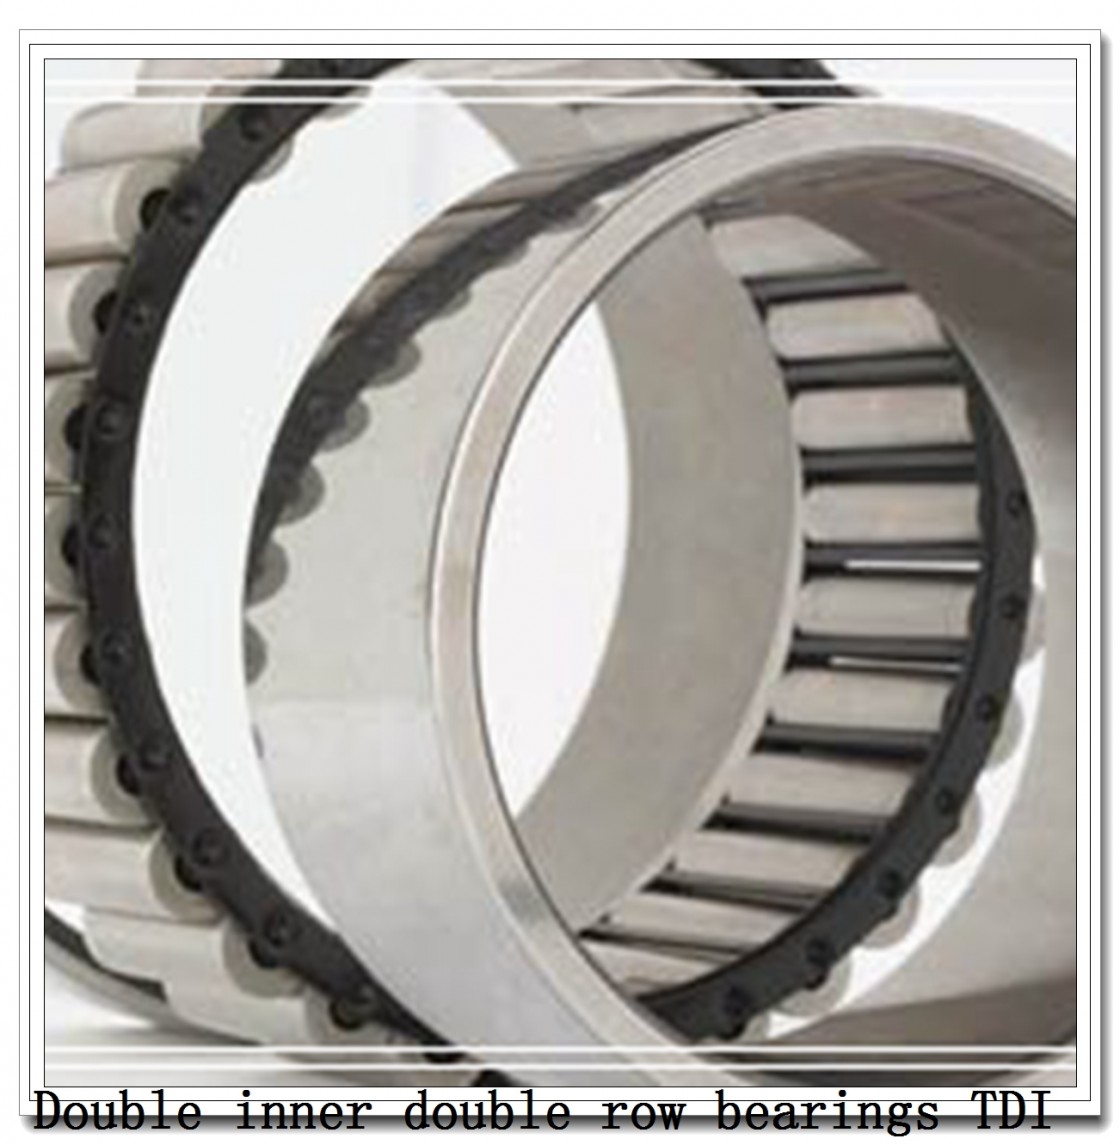 1040TDO1290-1 Double inner double row bearings TDI